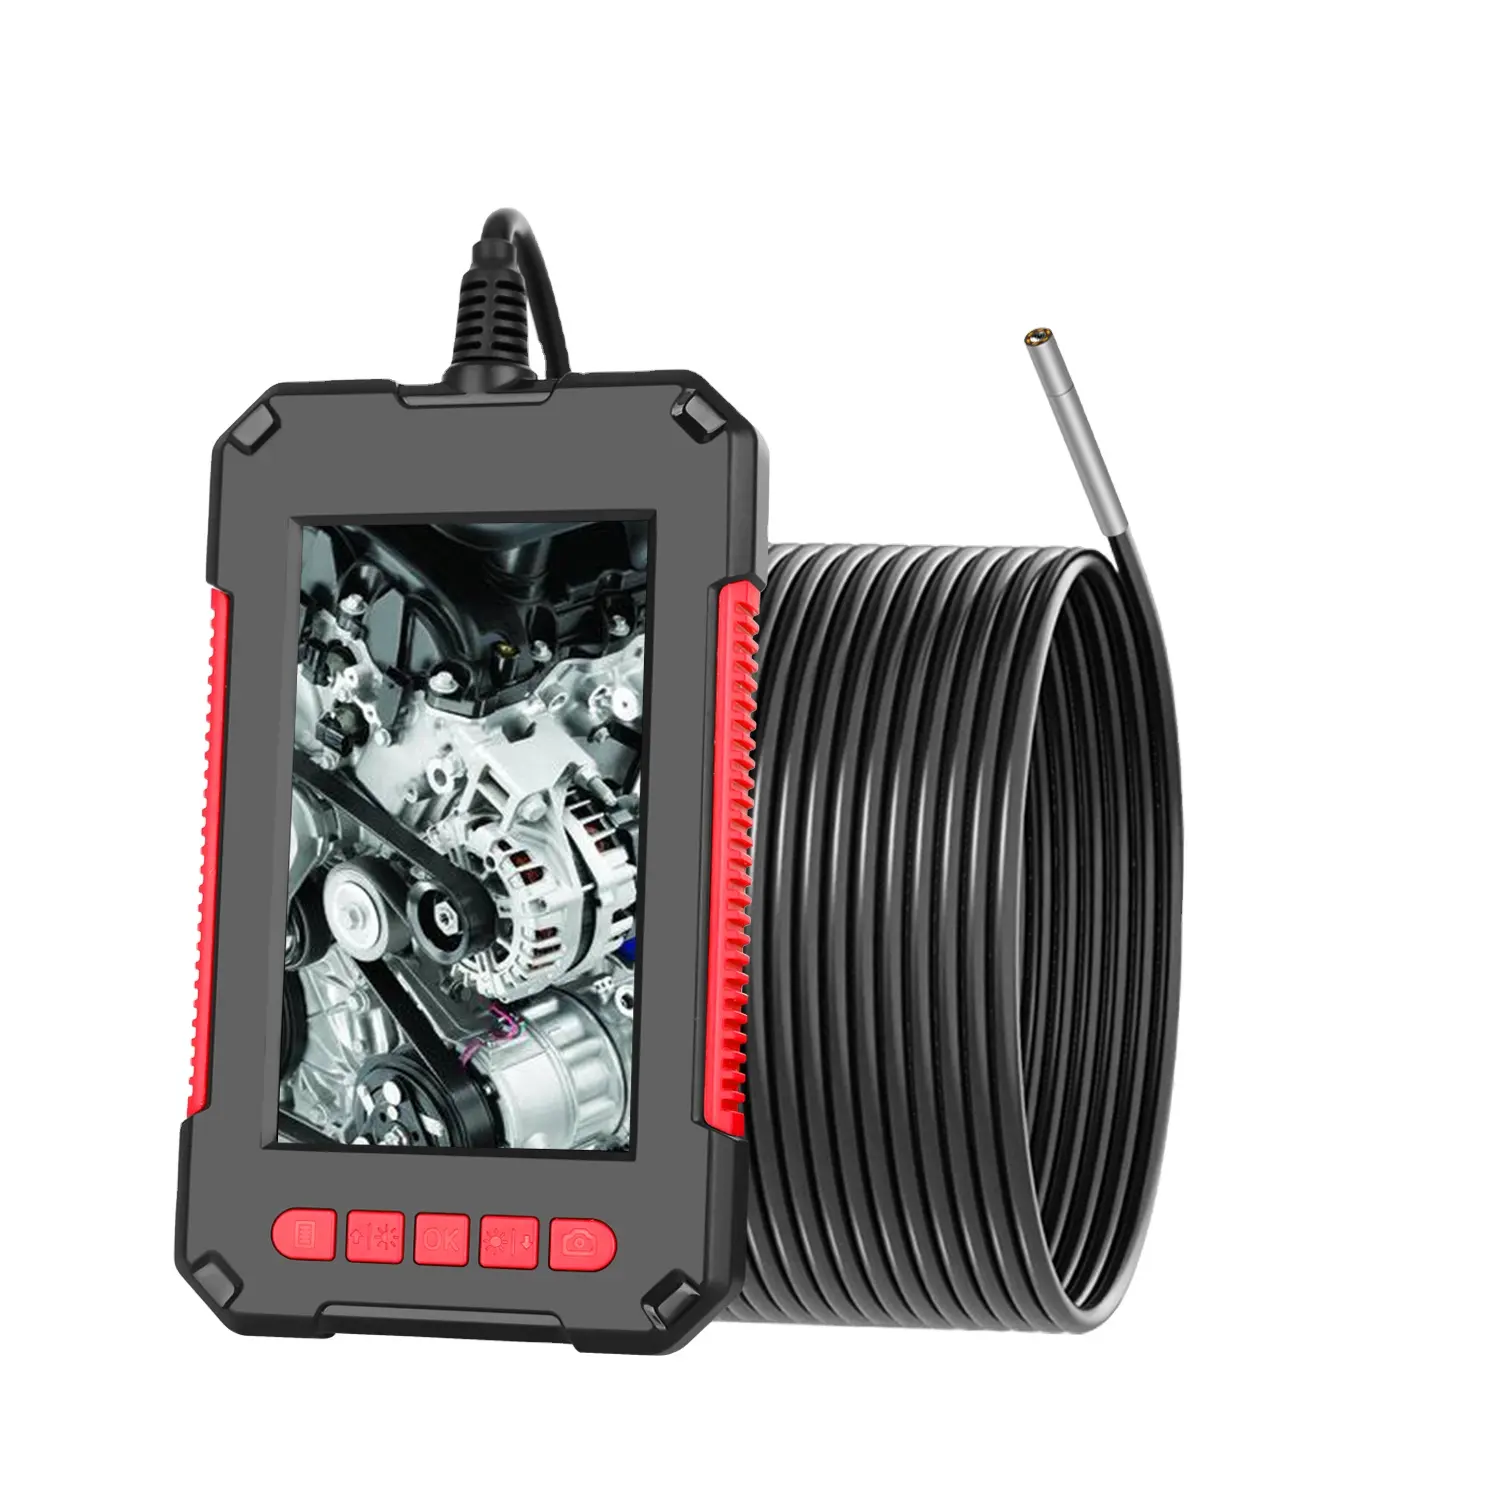 Thoninc 3.9mm portable IP68 digital video inspection borescope camera snake endoscope camera for Automobile engine maintenance